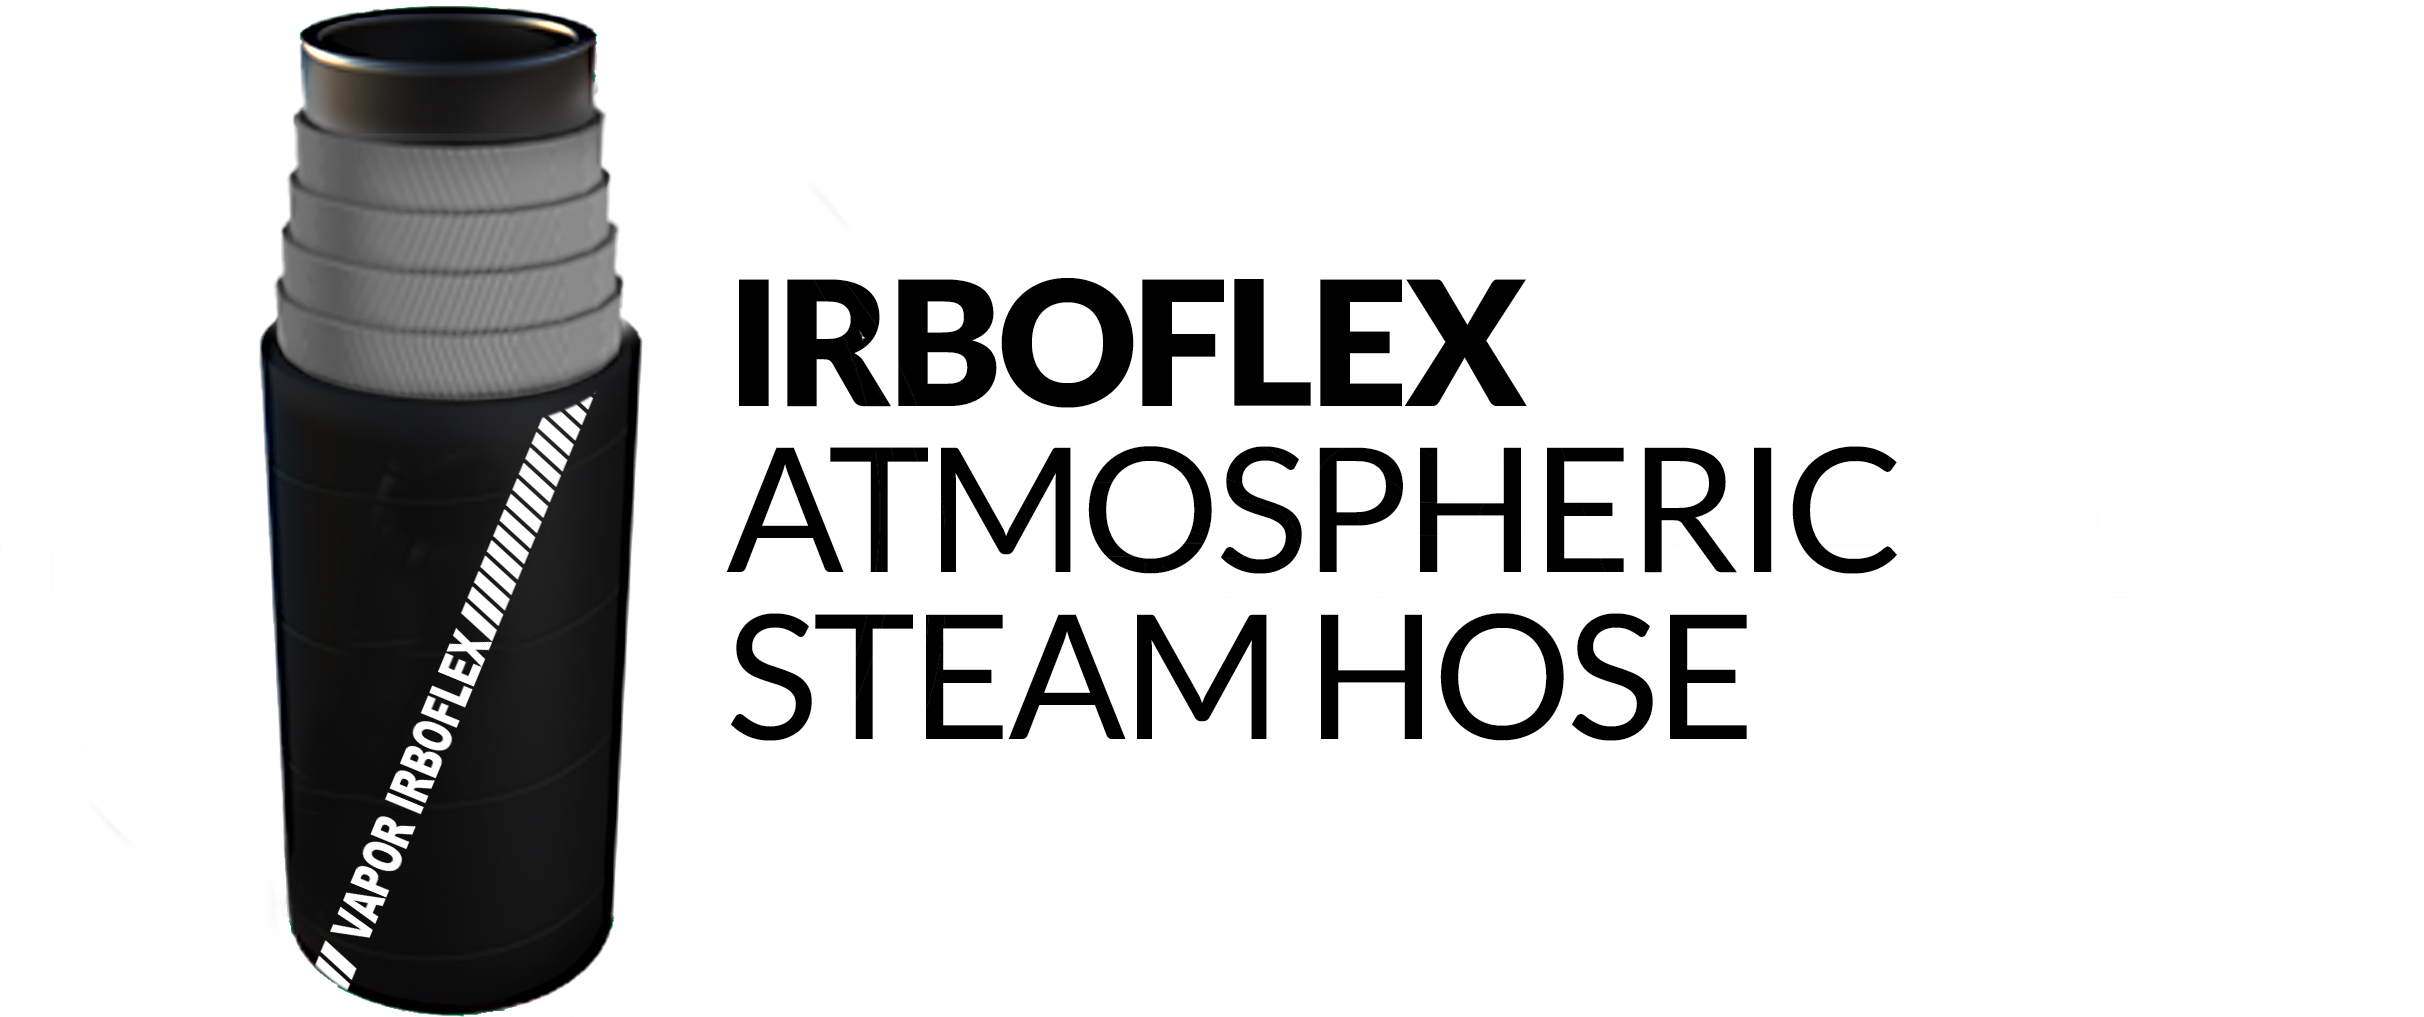 vapor-atmosferico__-_irboflex-atmospheric-steam-hose-copia